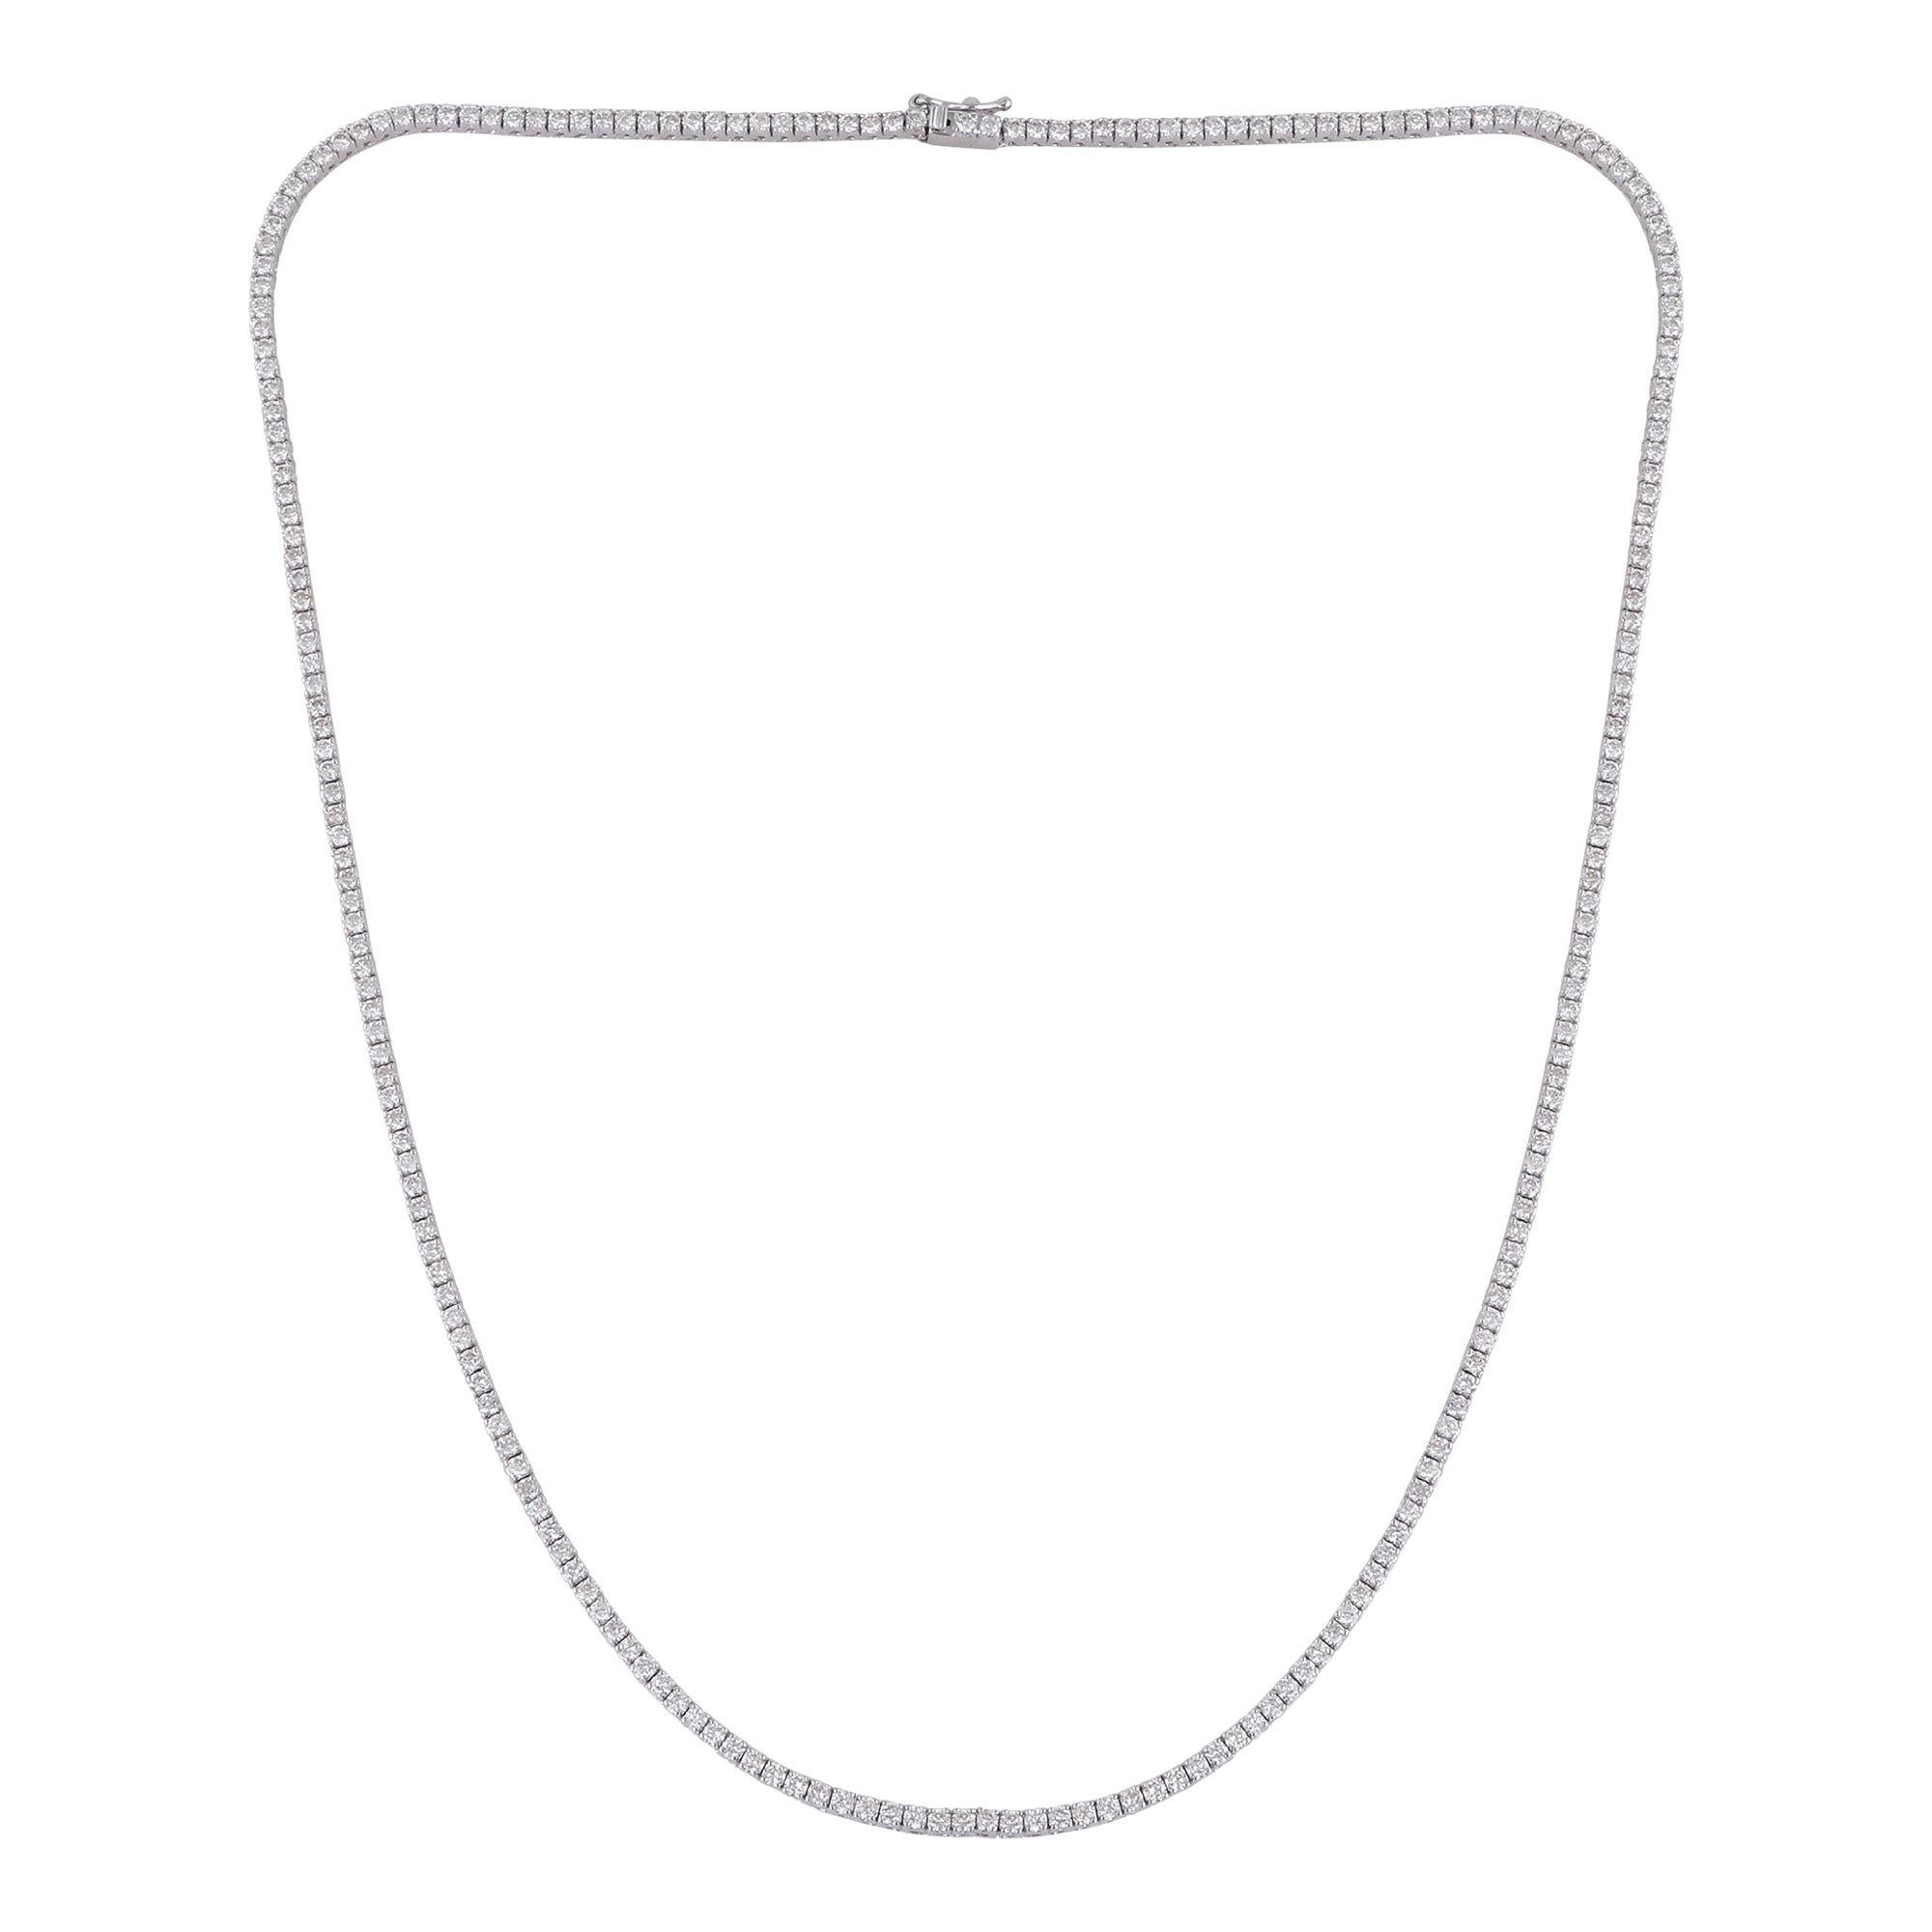 5.27 Carat SI Clarity HI Color Diamond Tennis Necklace 10k White Gold Jewelry